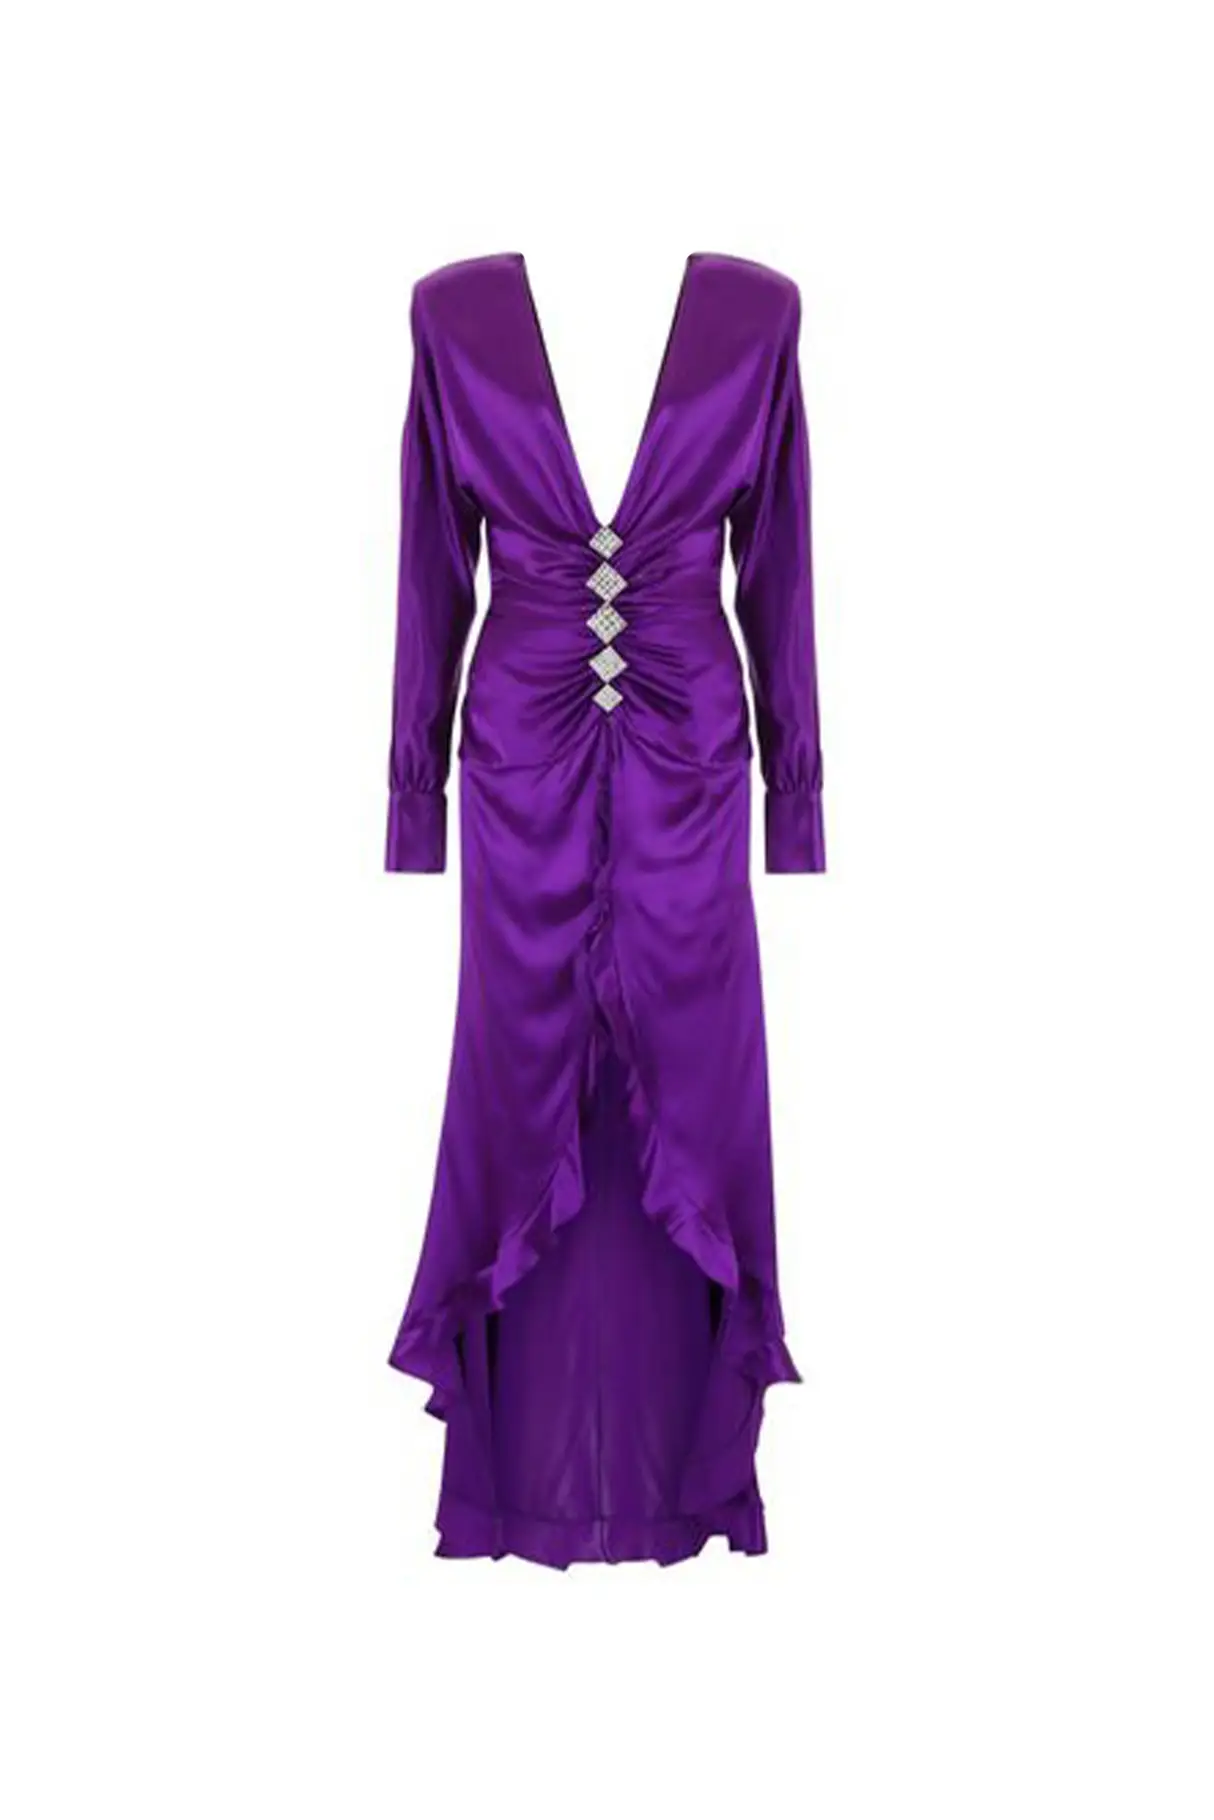 alessandra-rich-silk-purple-dress.jpg